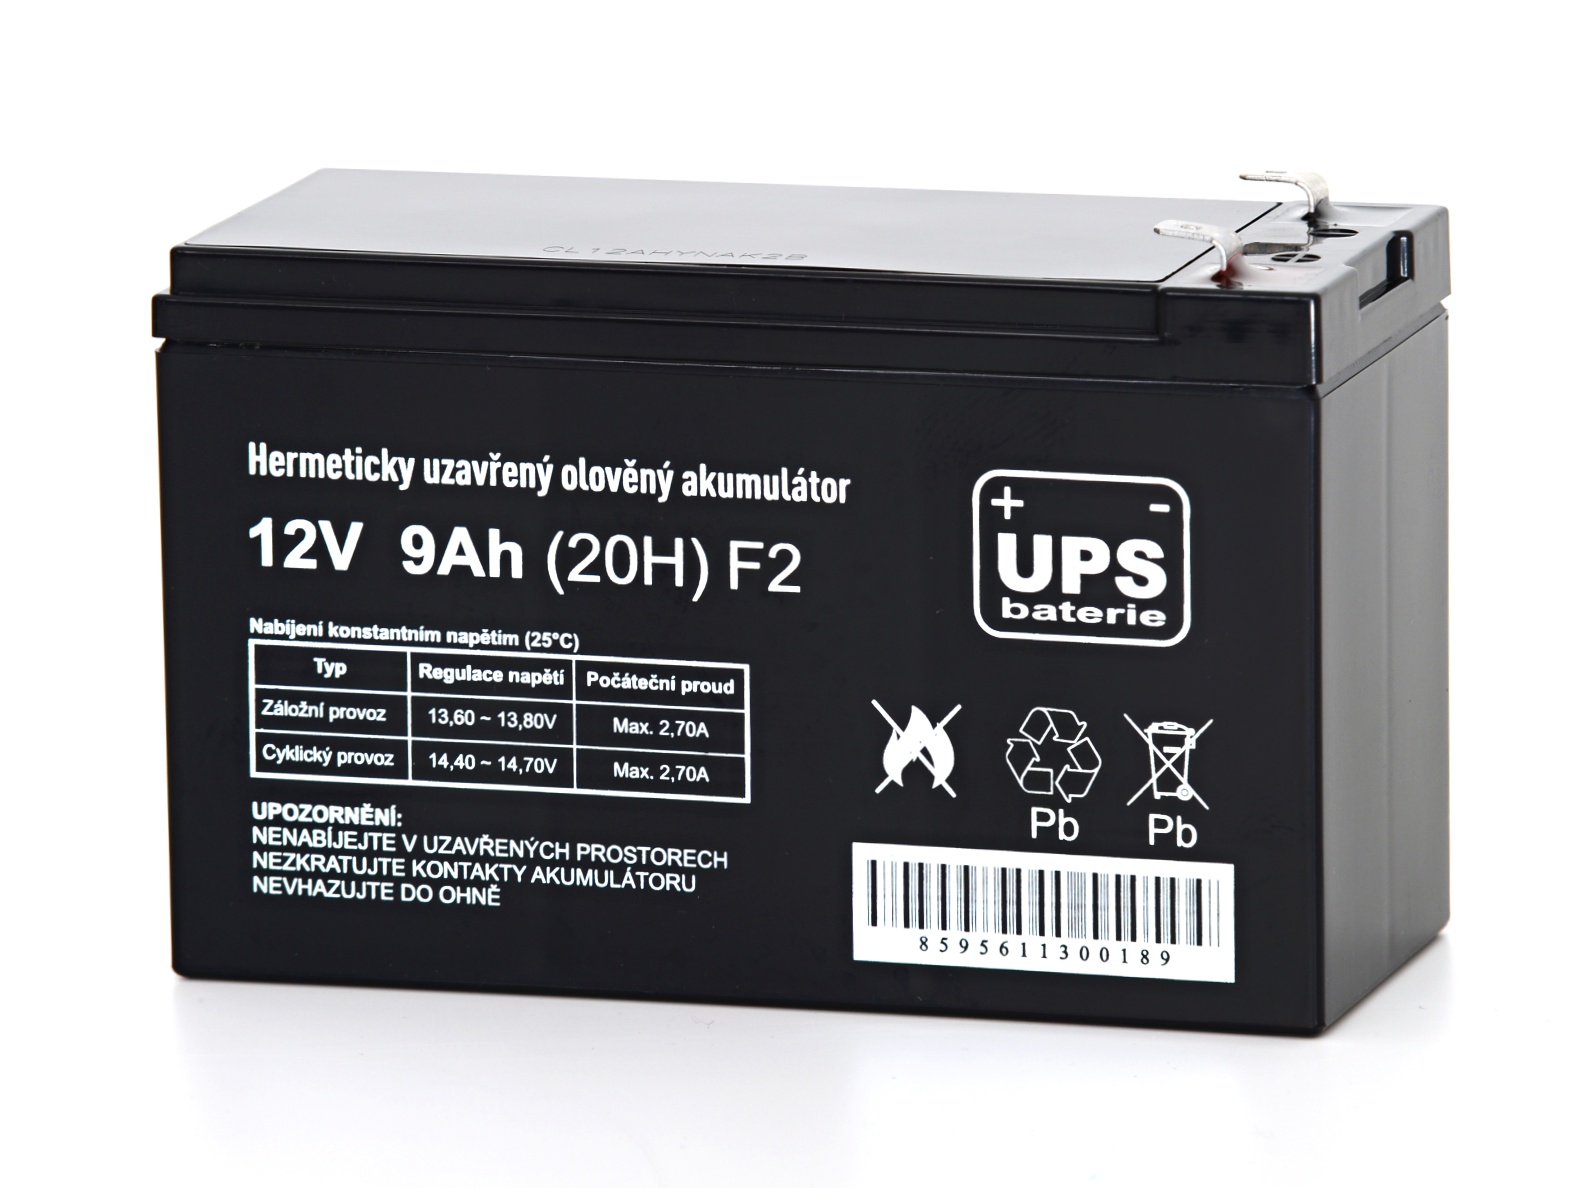 Obrázek UPS baterie 12V 9Ah F2